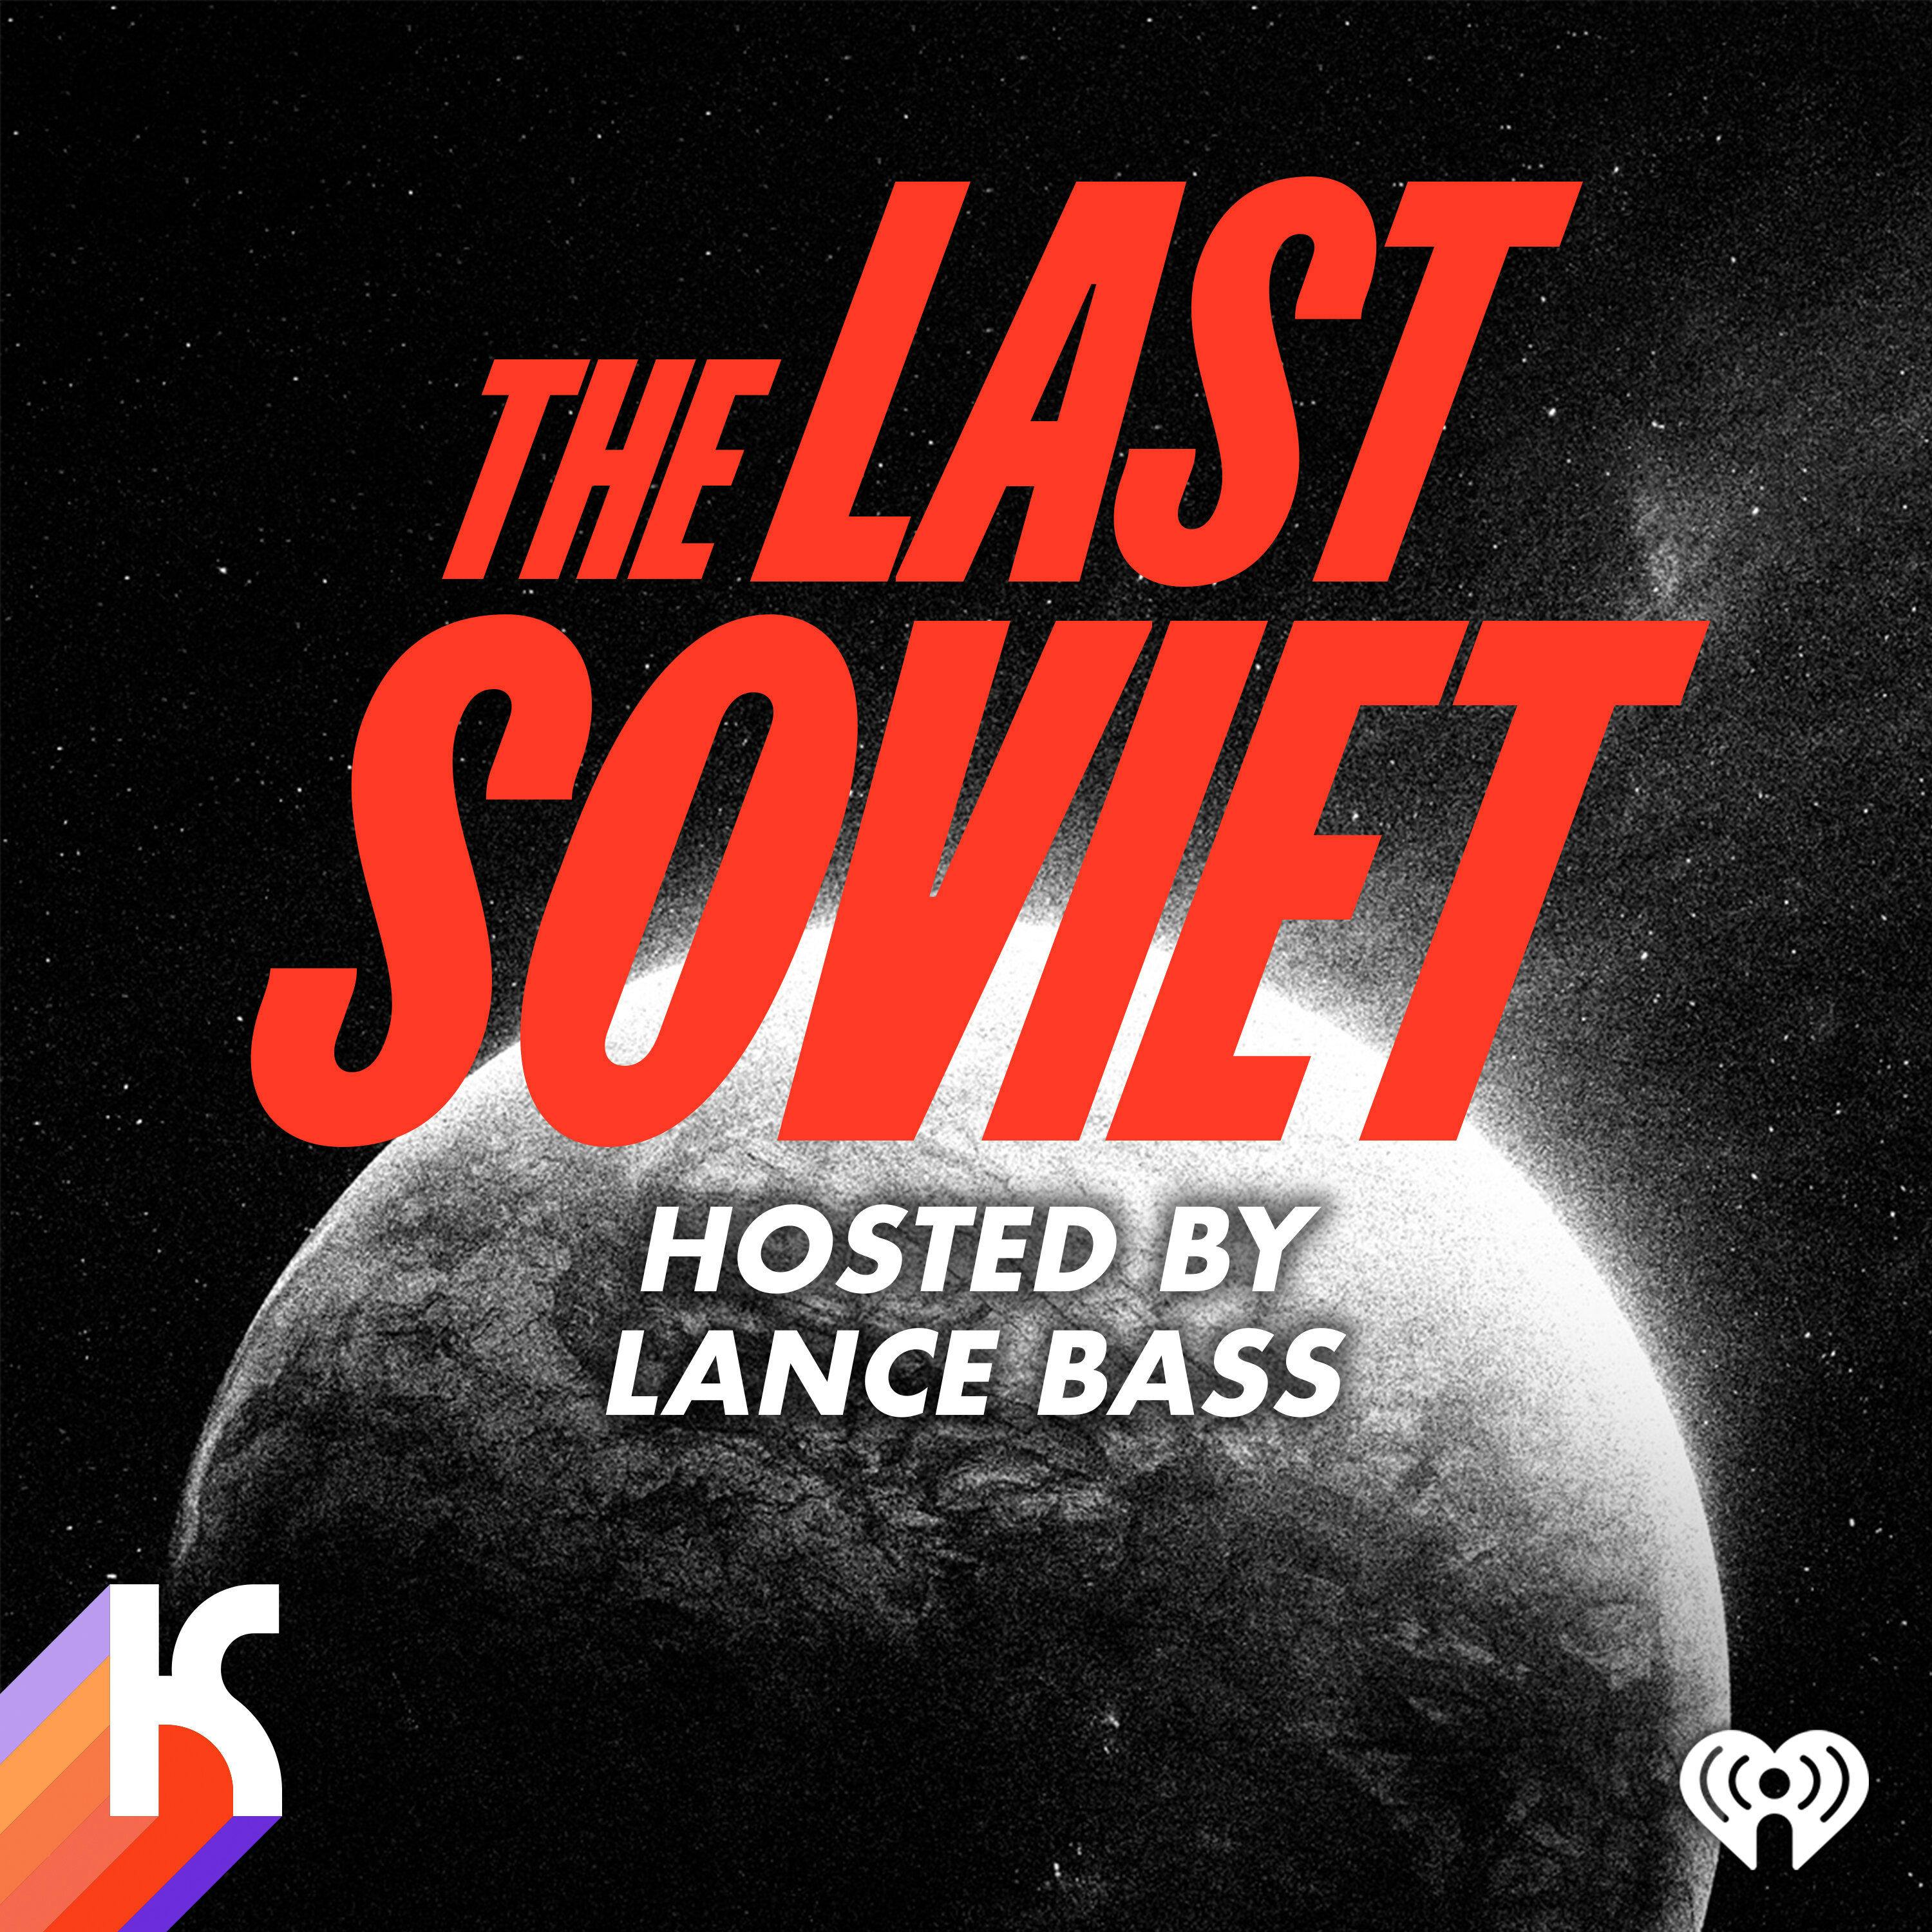 The Last Soviet